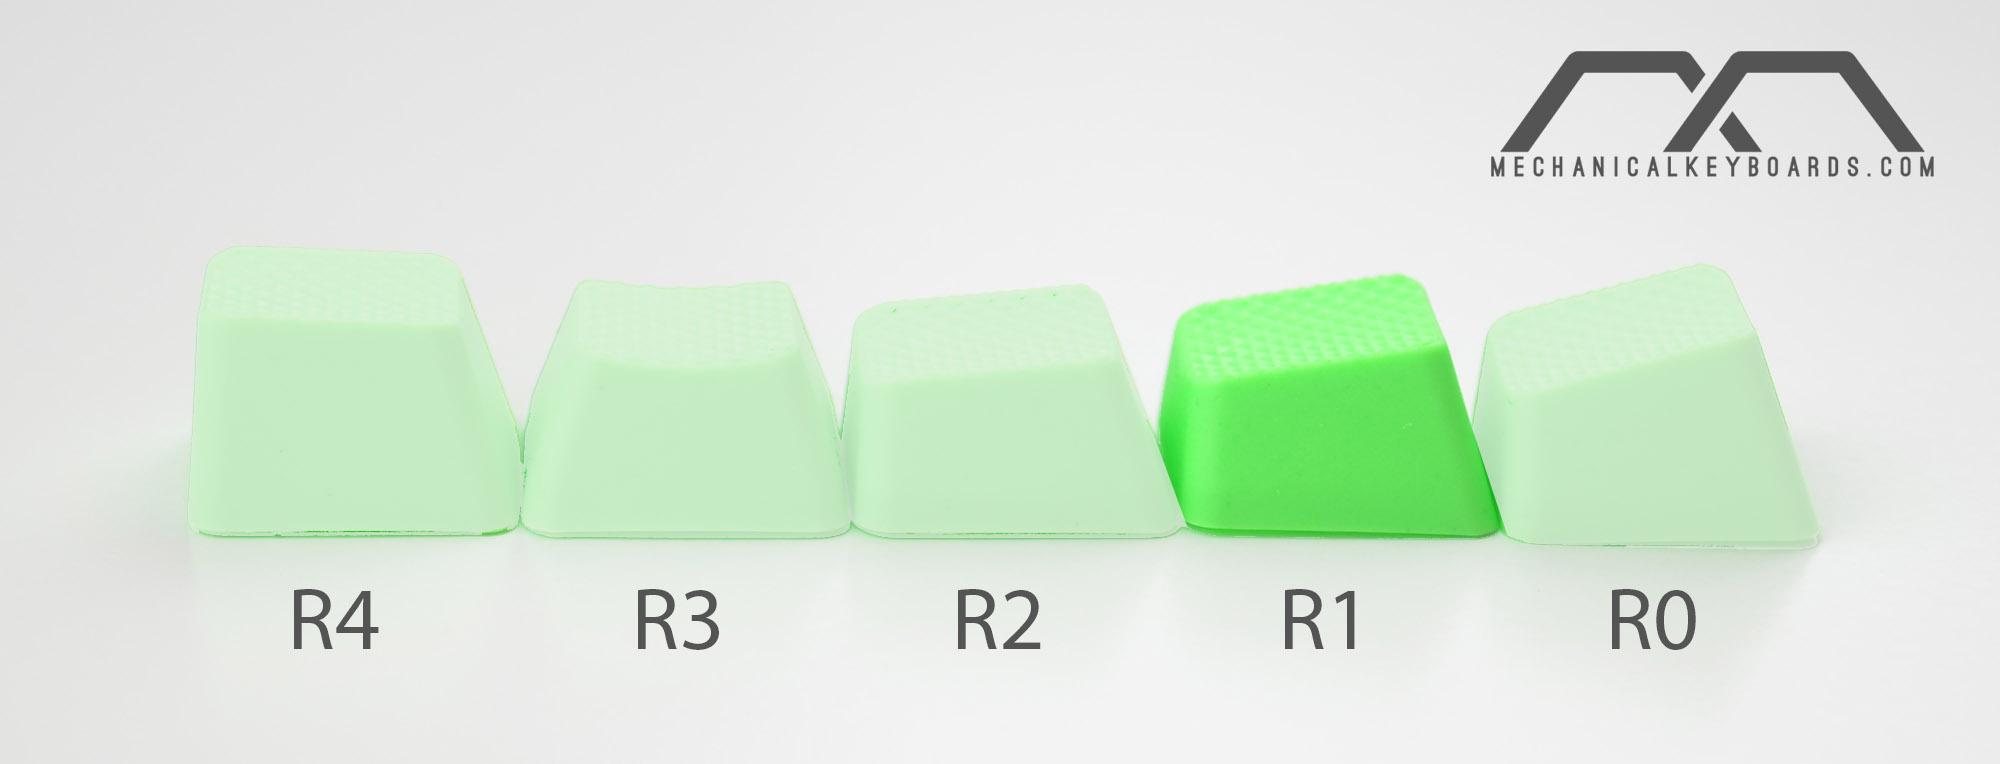 Tai-Hao 4 Key TPR Blank Rubber Keycap Set Neon Green Row 1 MKAXZDFYBD |0|